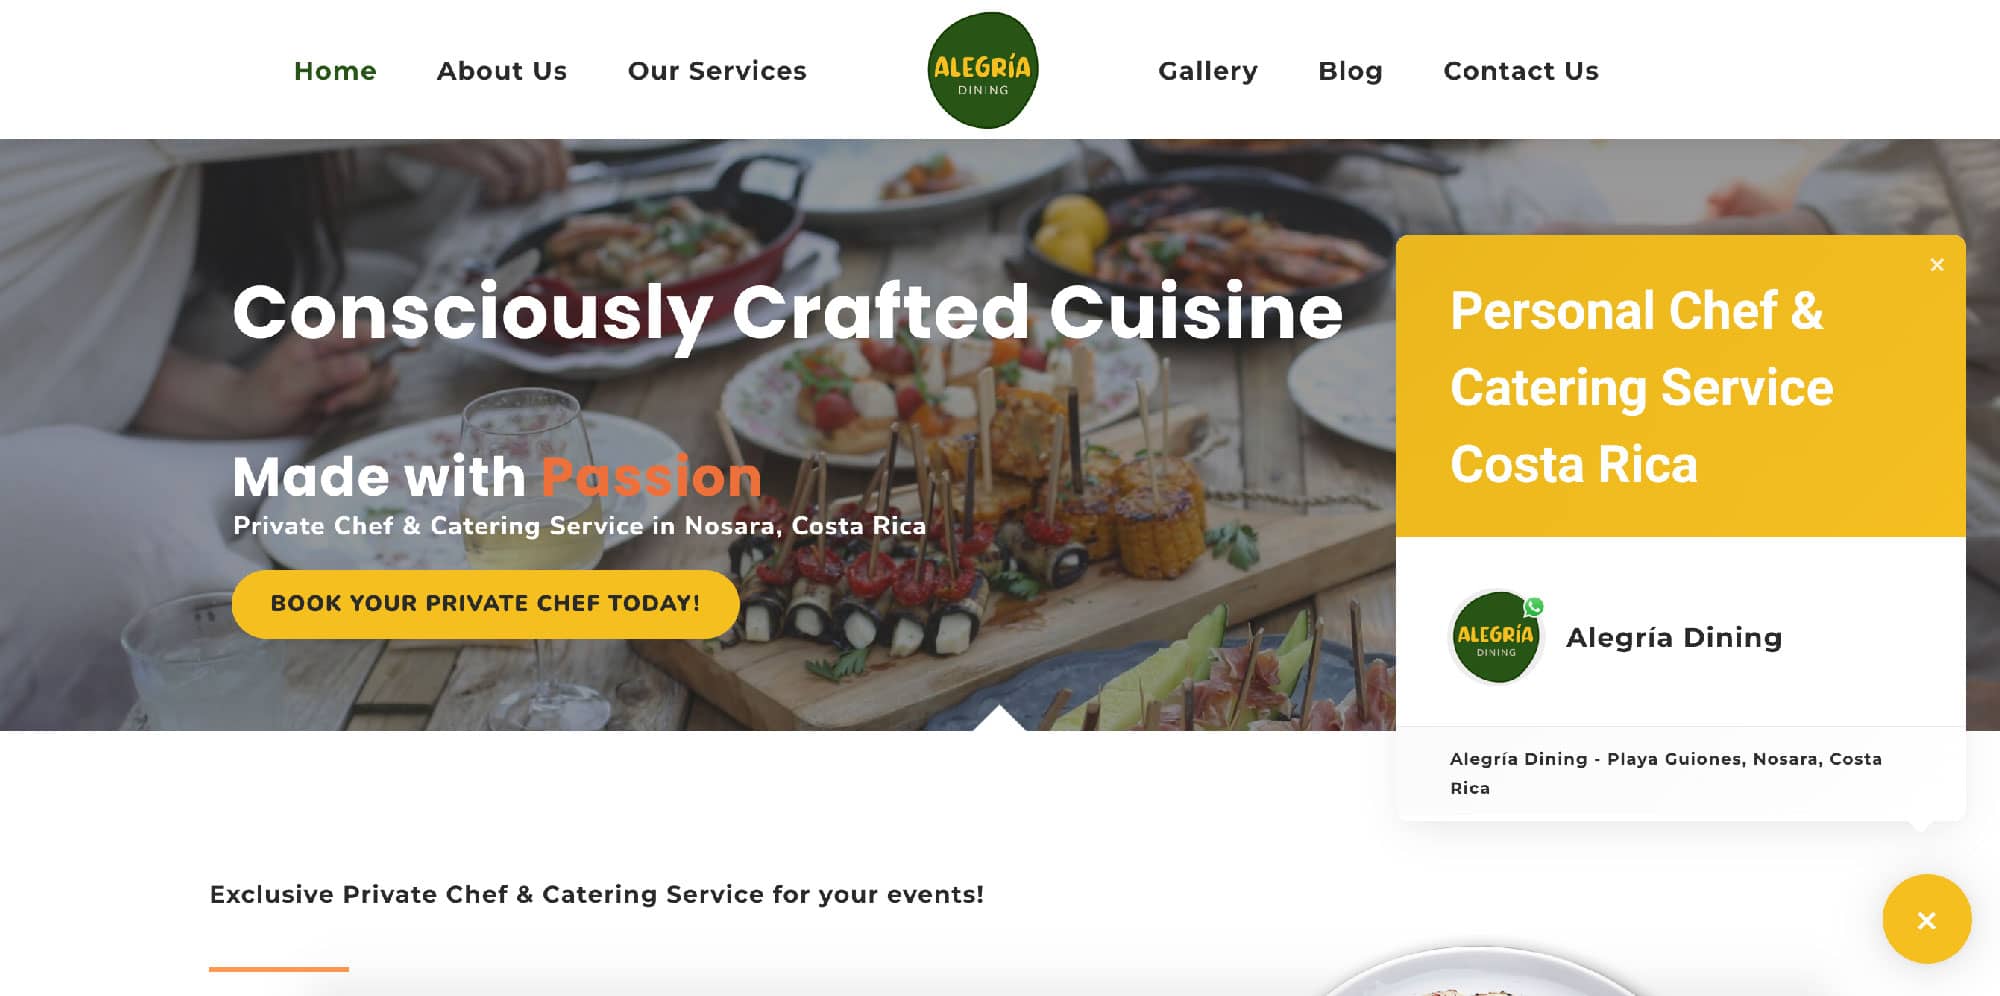 alegria-dining-website-homepage